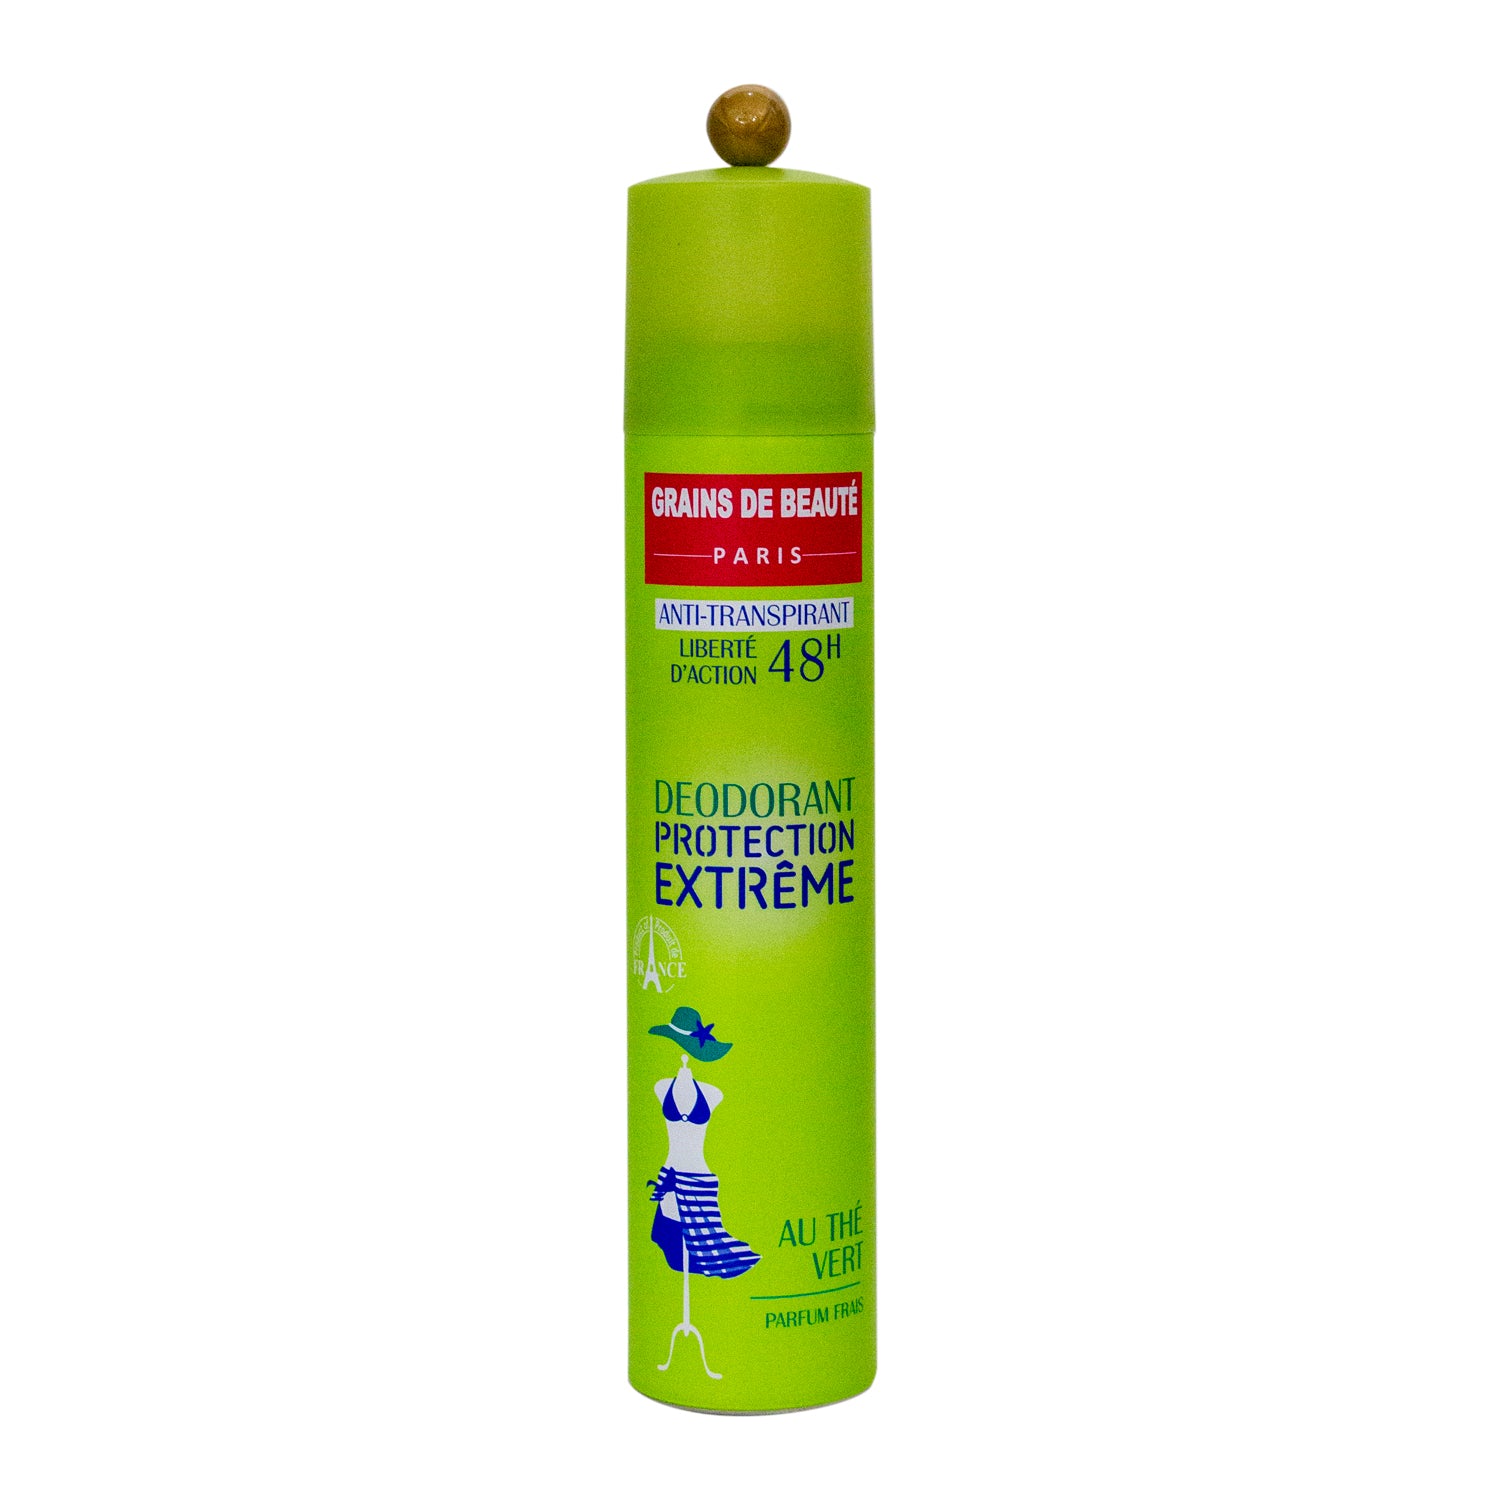 Grains De Beaute Protection Extreme Au The Vert Deodorant Spray 200ml